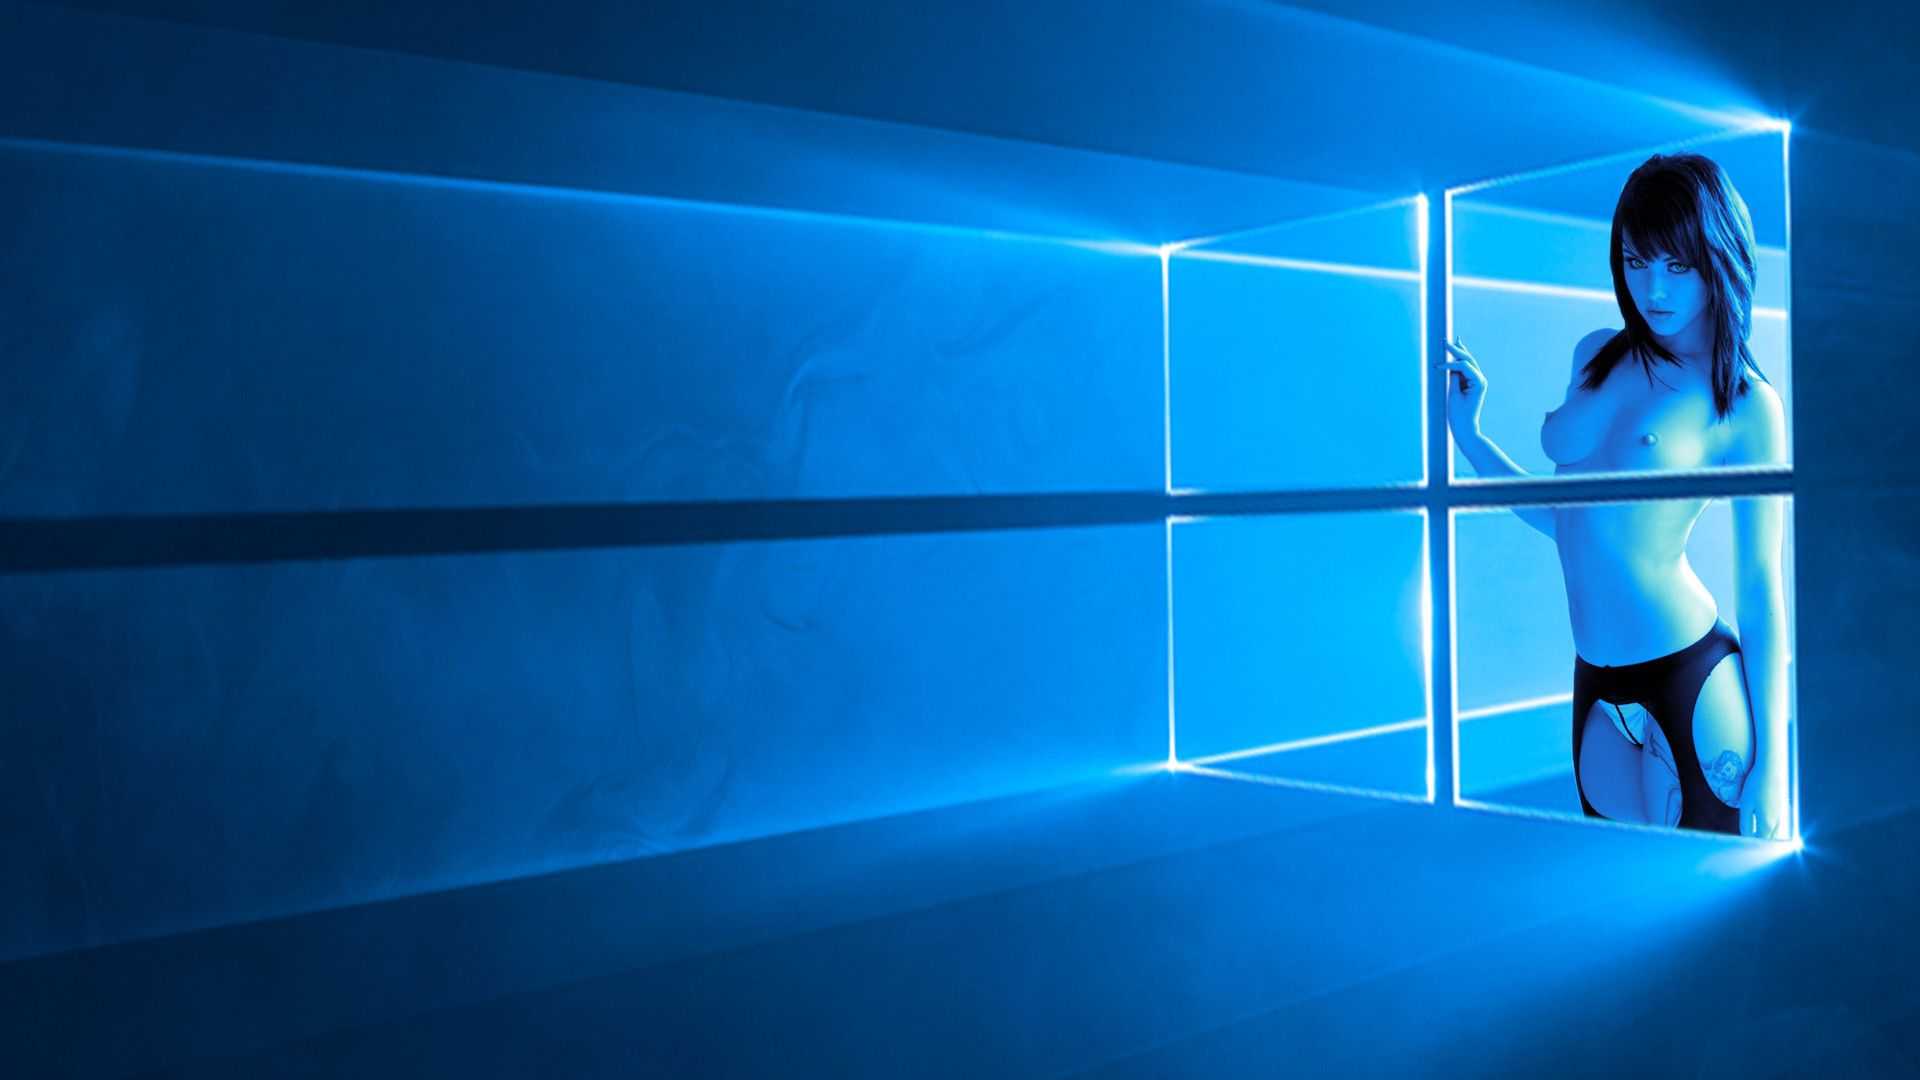 Microsoft lively wallpaper. Обои на рабочий стол Windows 10. Фоновые рисунки Windows 10. Фон рабочего стола виндовс. Фон рабочего стола виндовс 10.